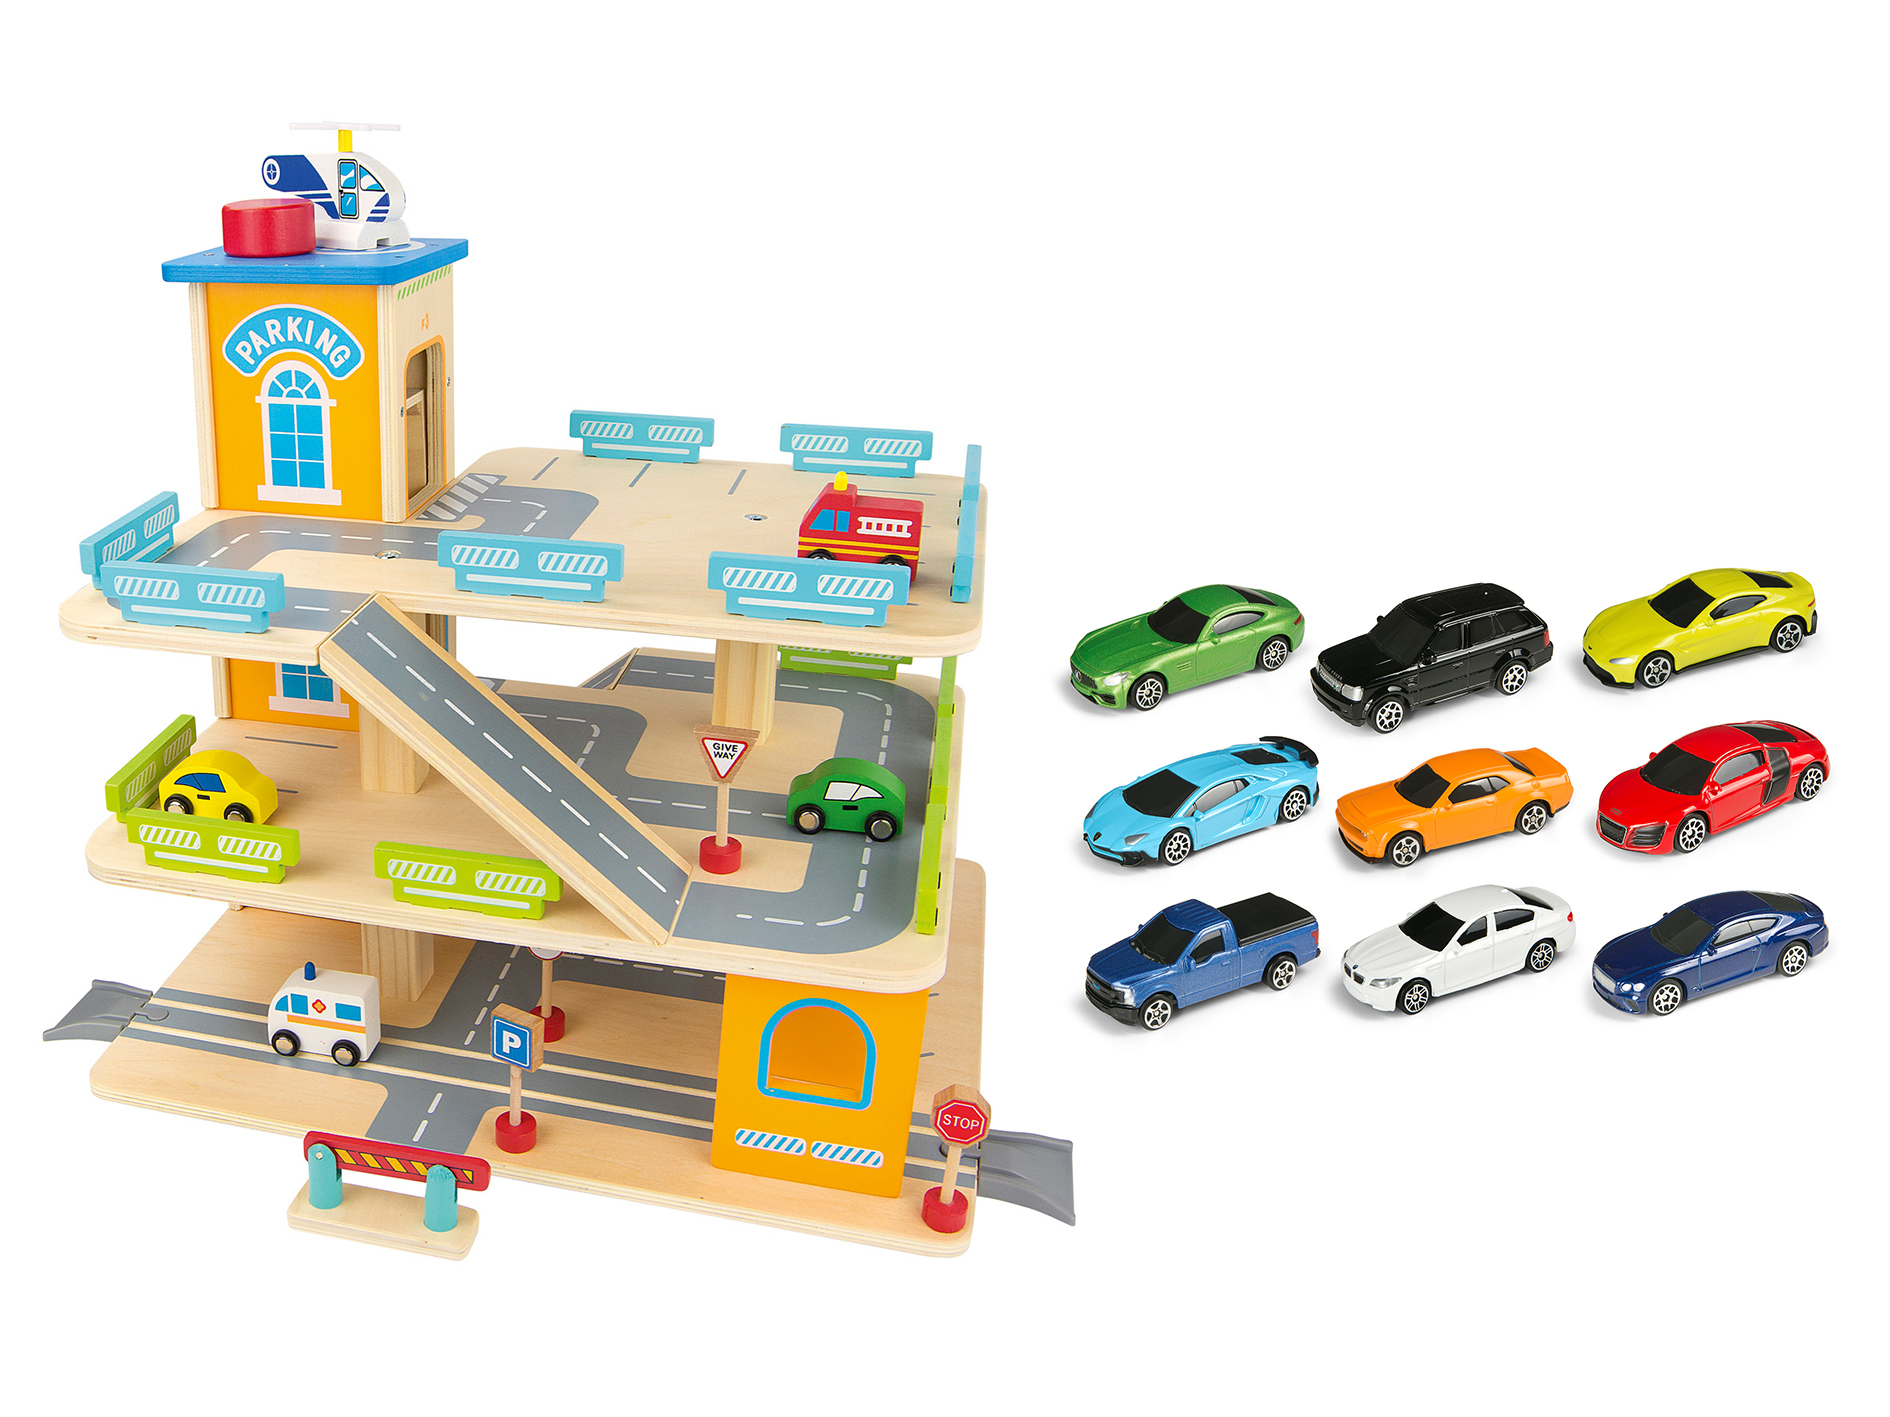 Garage parking voitures enfant - 3 niveaux, 6 voitures, ascenseur, rampes  en spirale, 15 places stationnement - PP ABS orange gris bleu